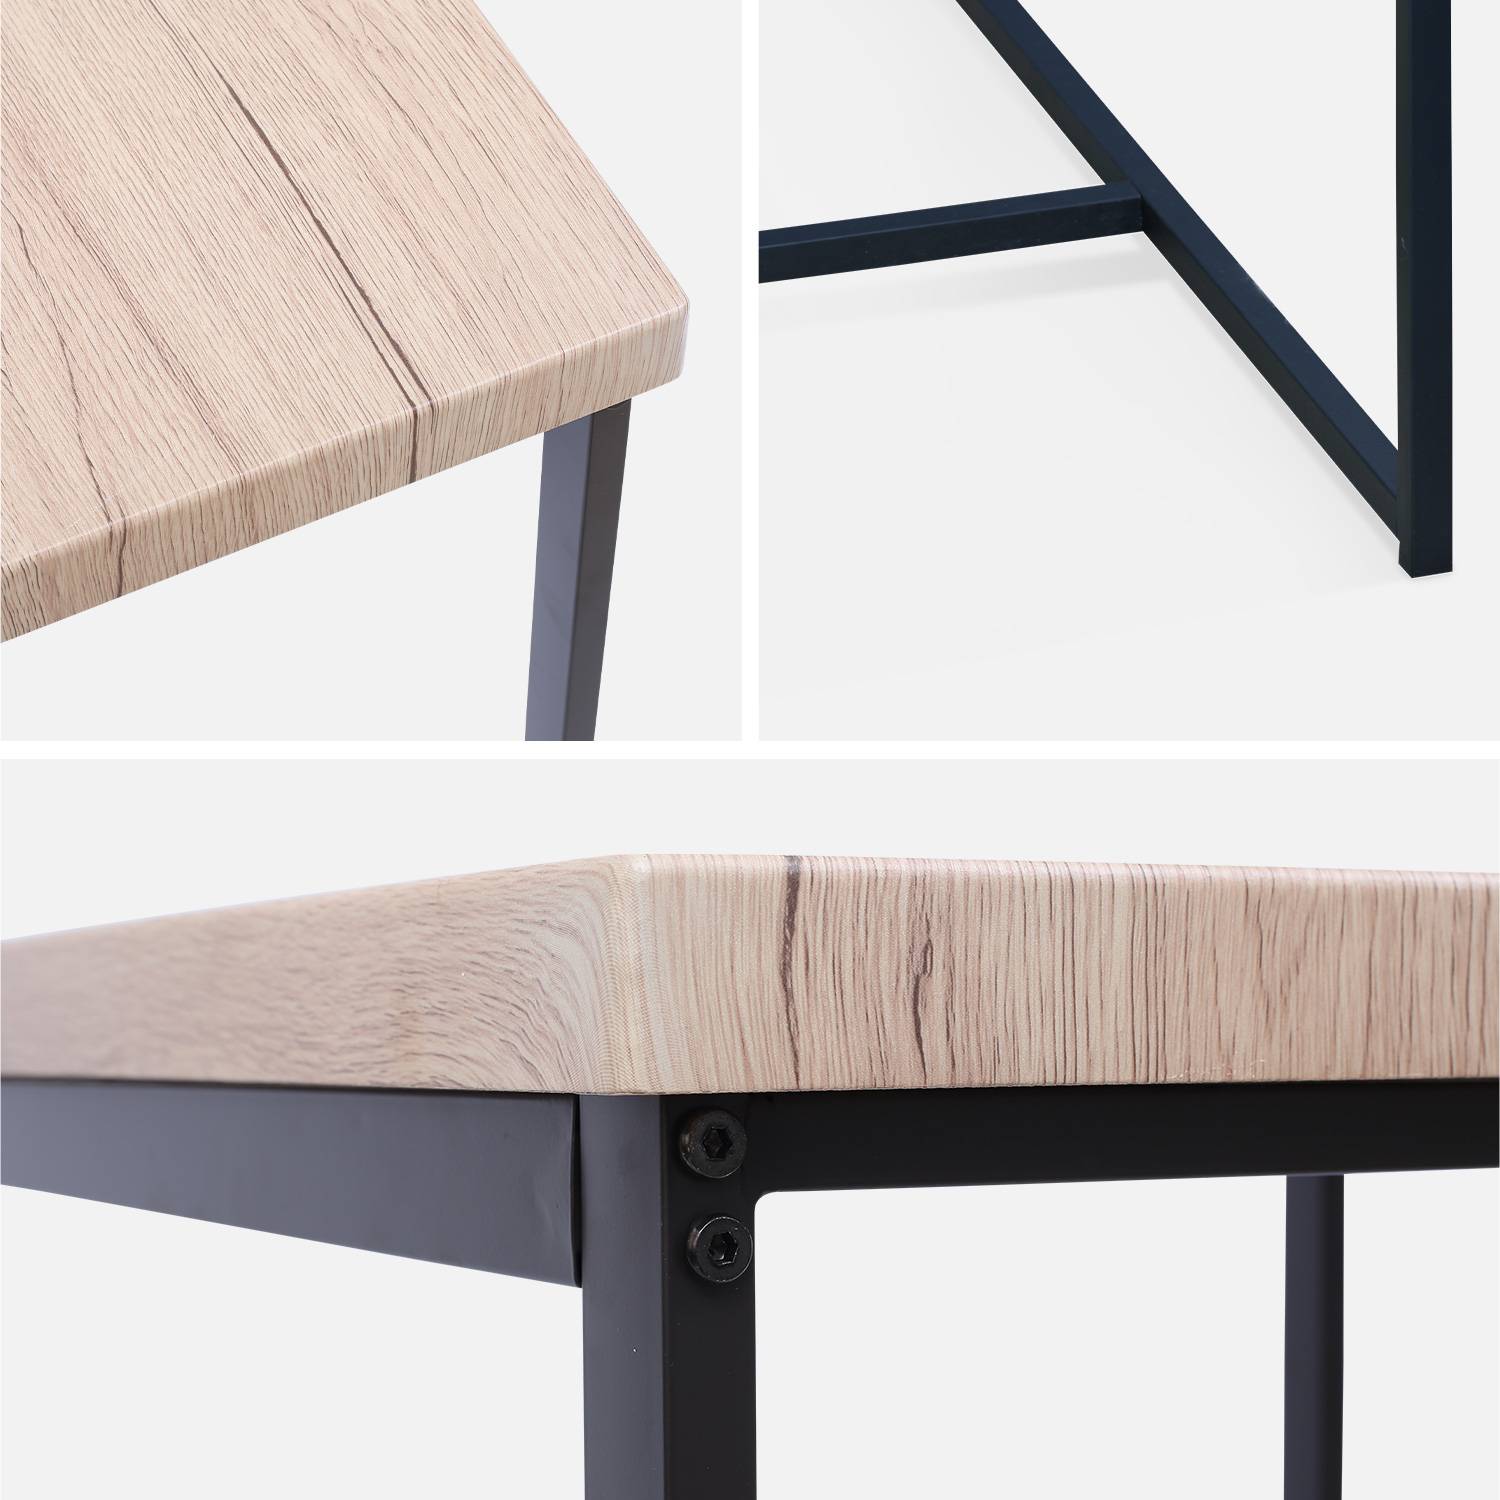 Industrial bar style table set with 2 stools, 60x60x88cm - Loft - Black Photo6